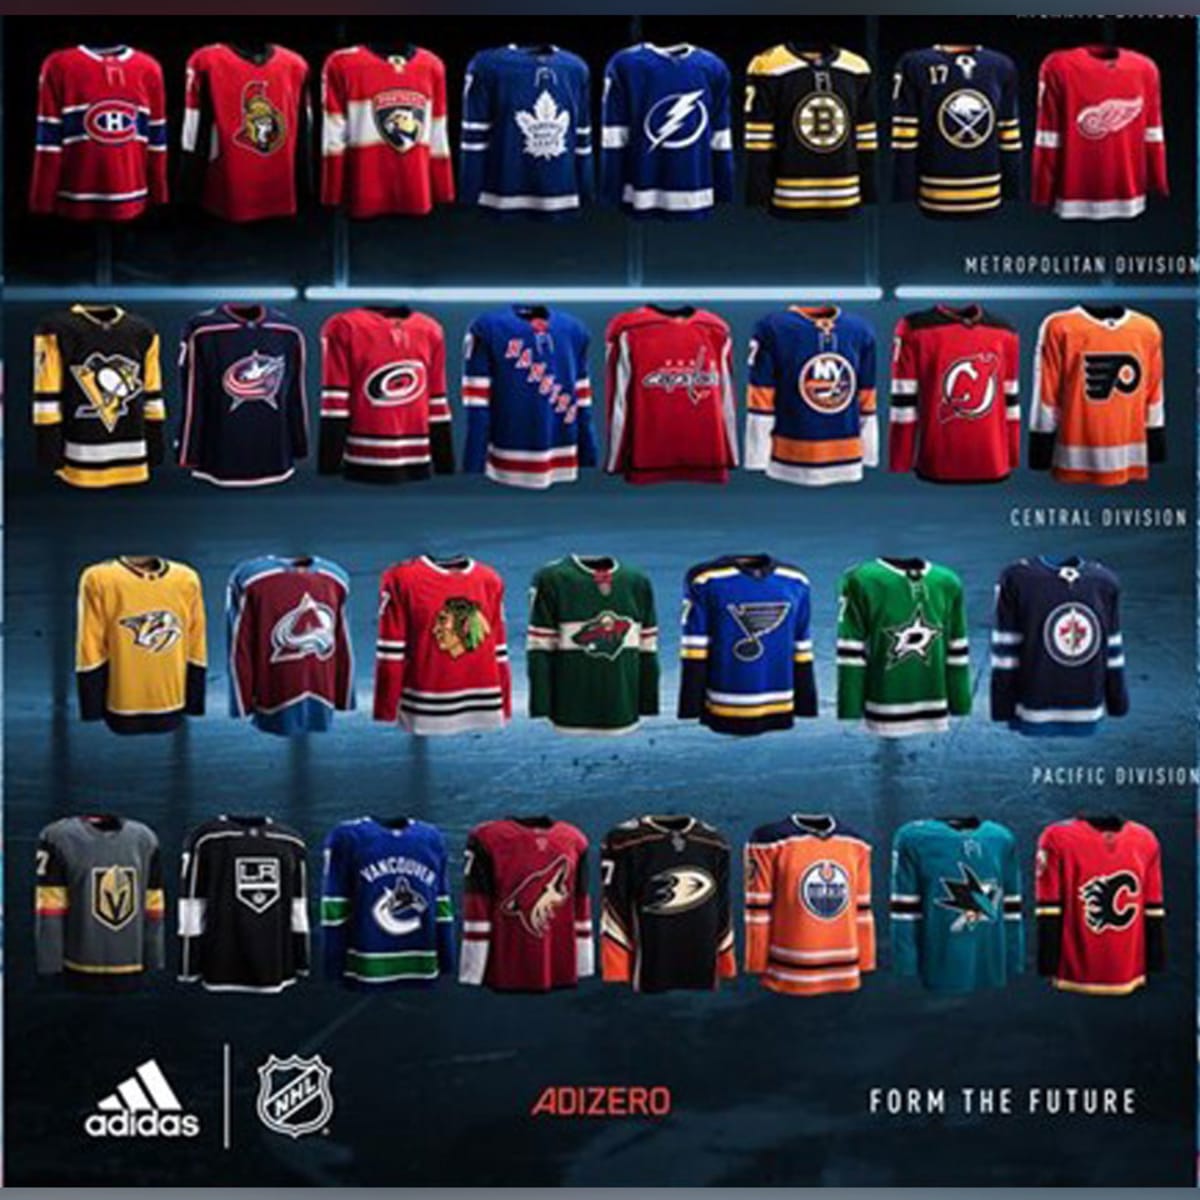 Who makes NHL jerseys?